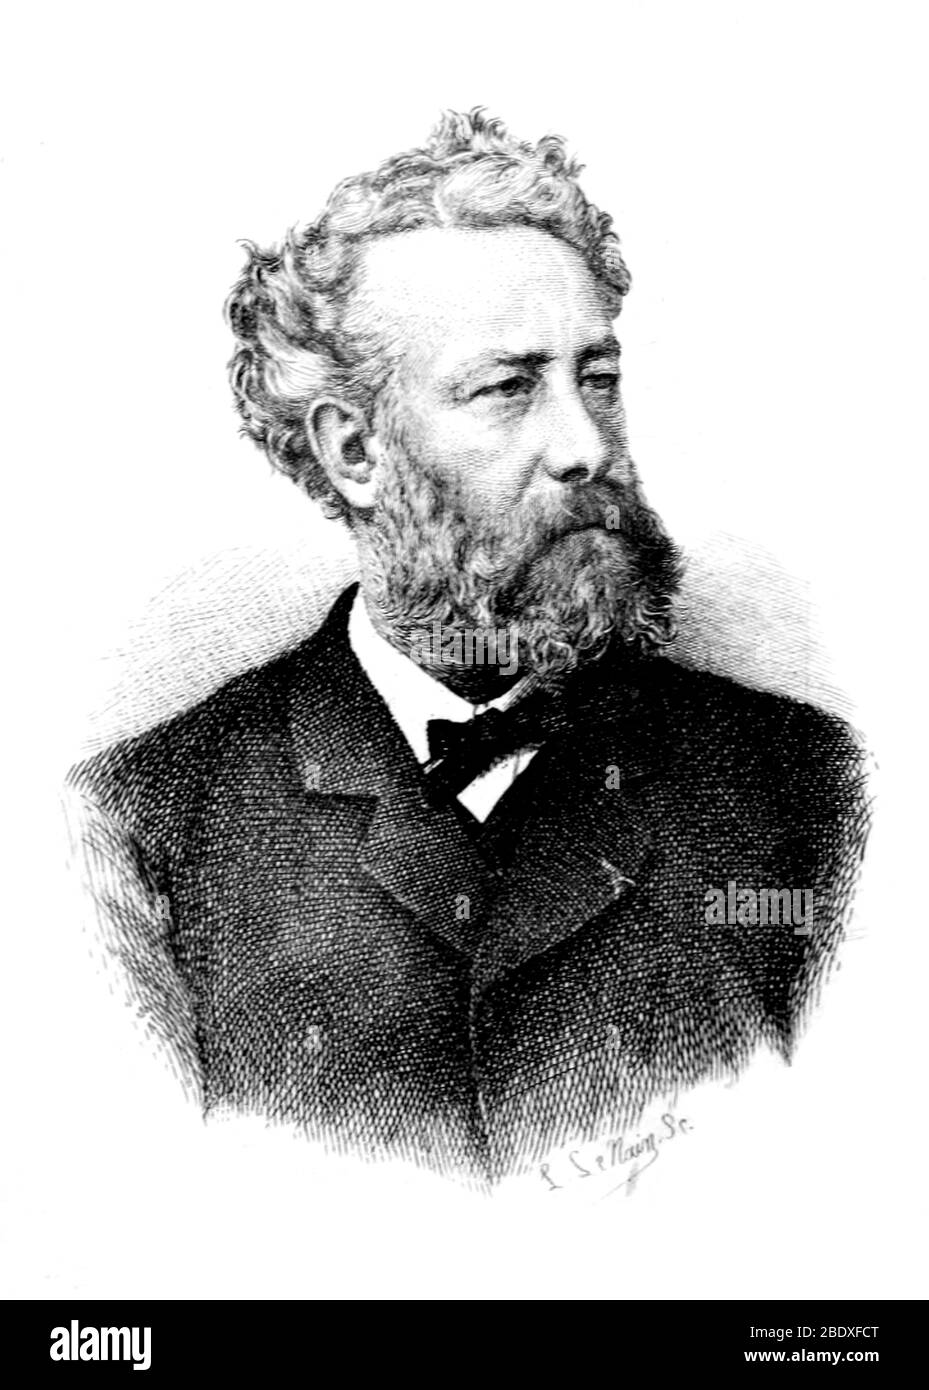 Jules Verne, autore francese Foto Stock